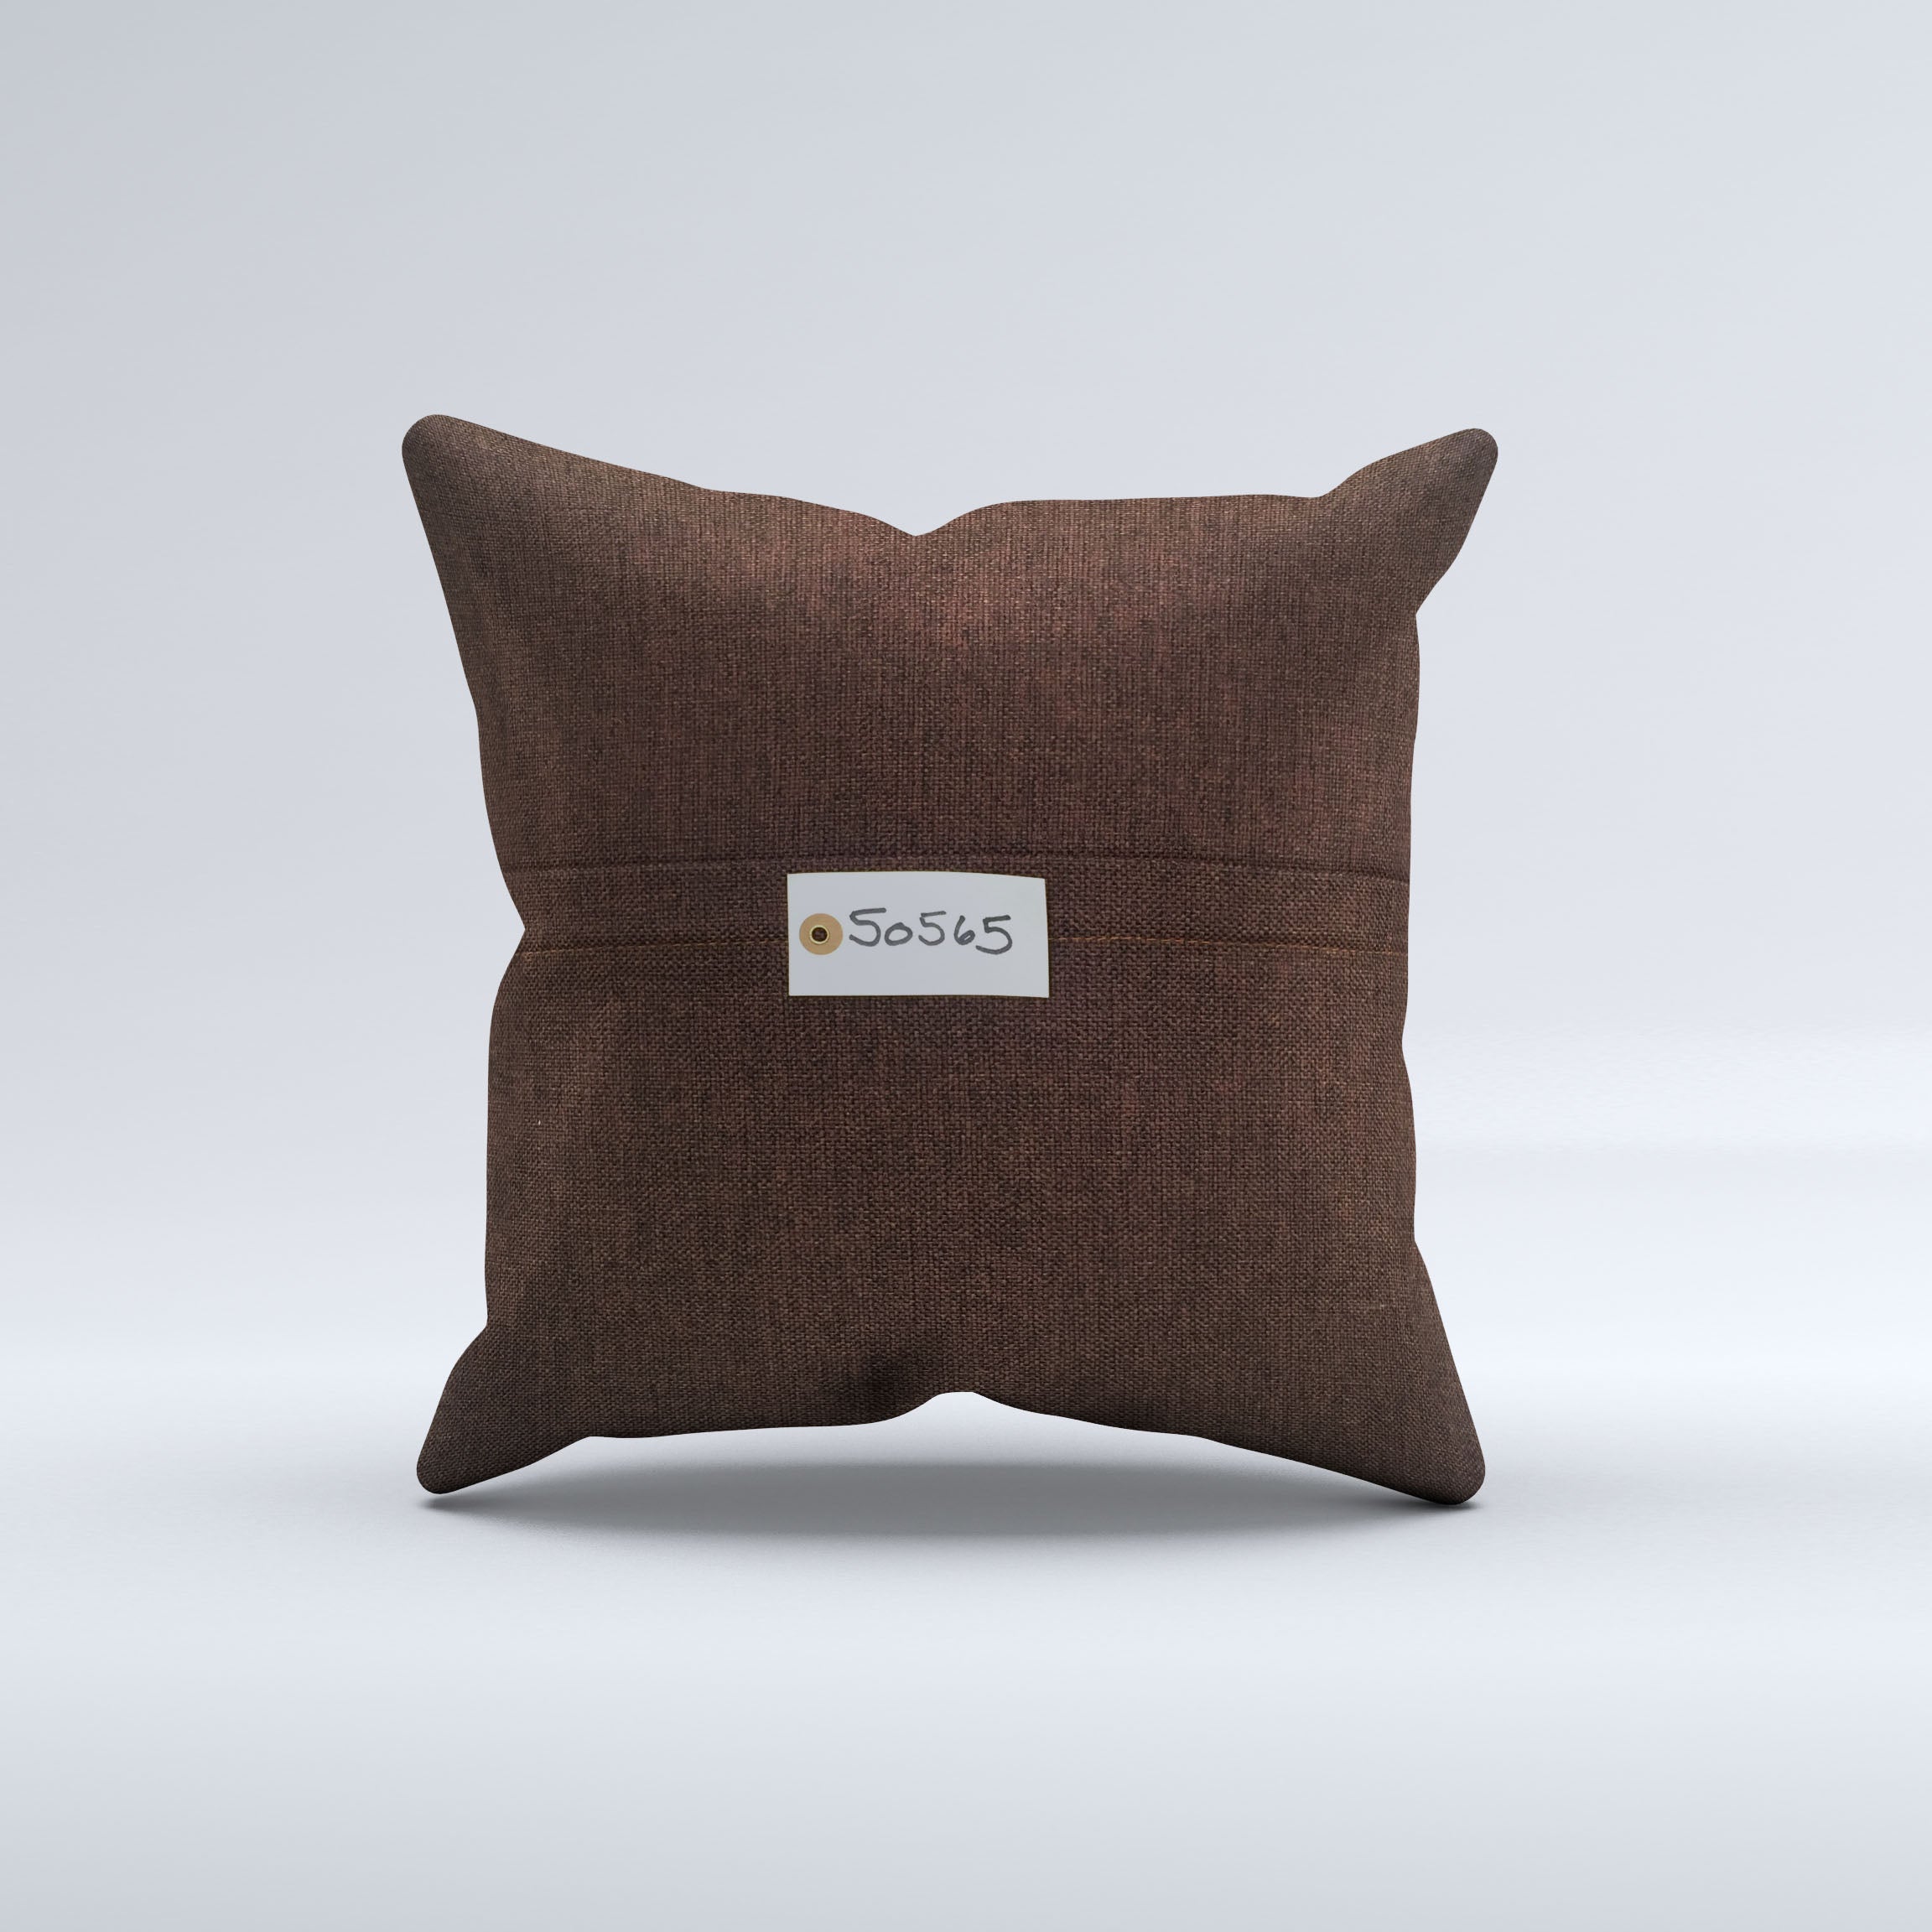 Vintage Turkish Kilim Cushion Cover 50x50 cm Square Wool Kelim Pillowcase 50565